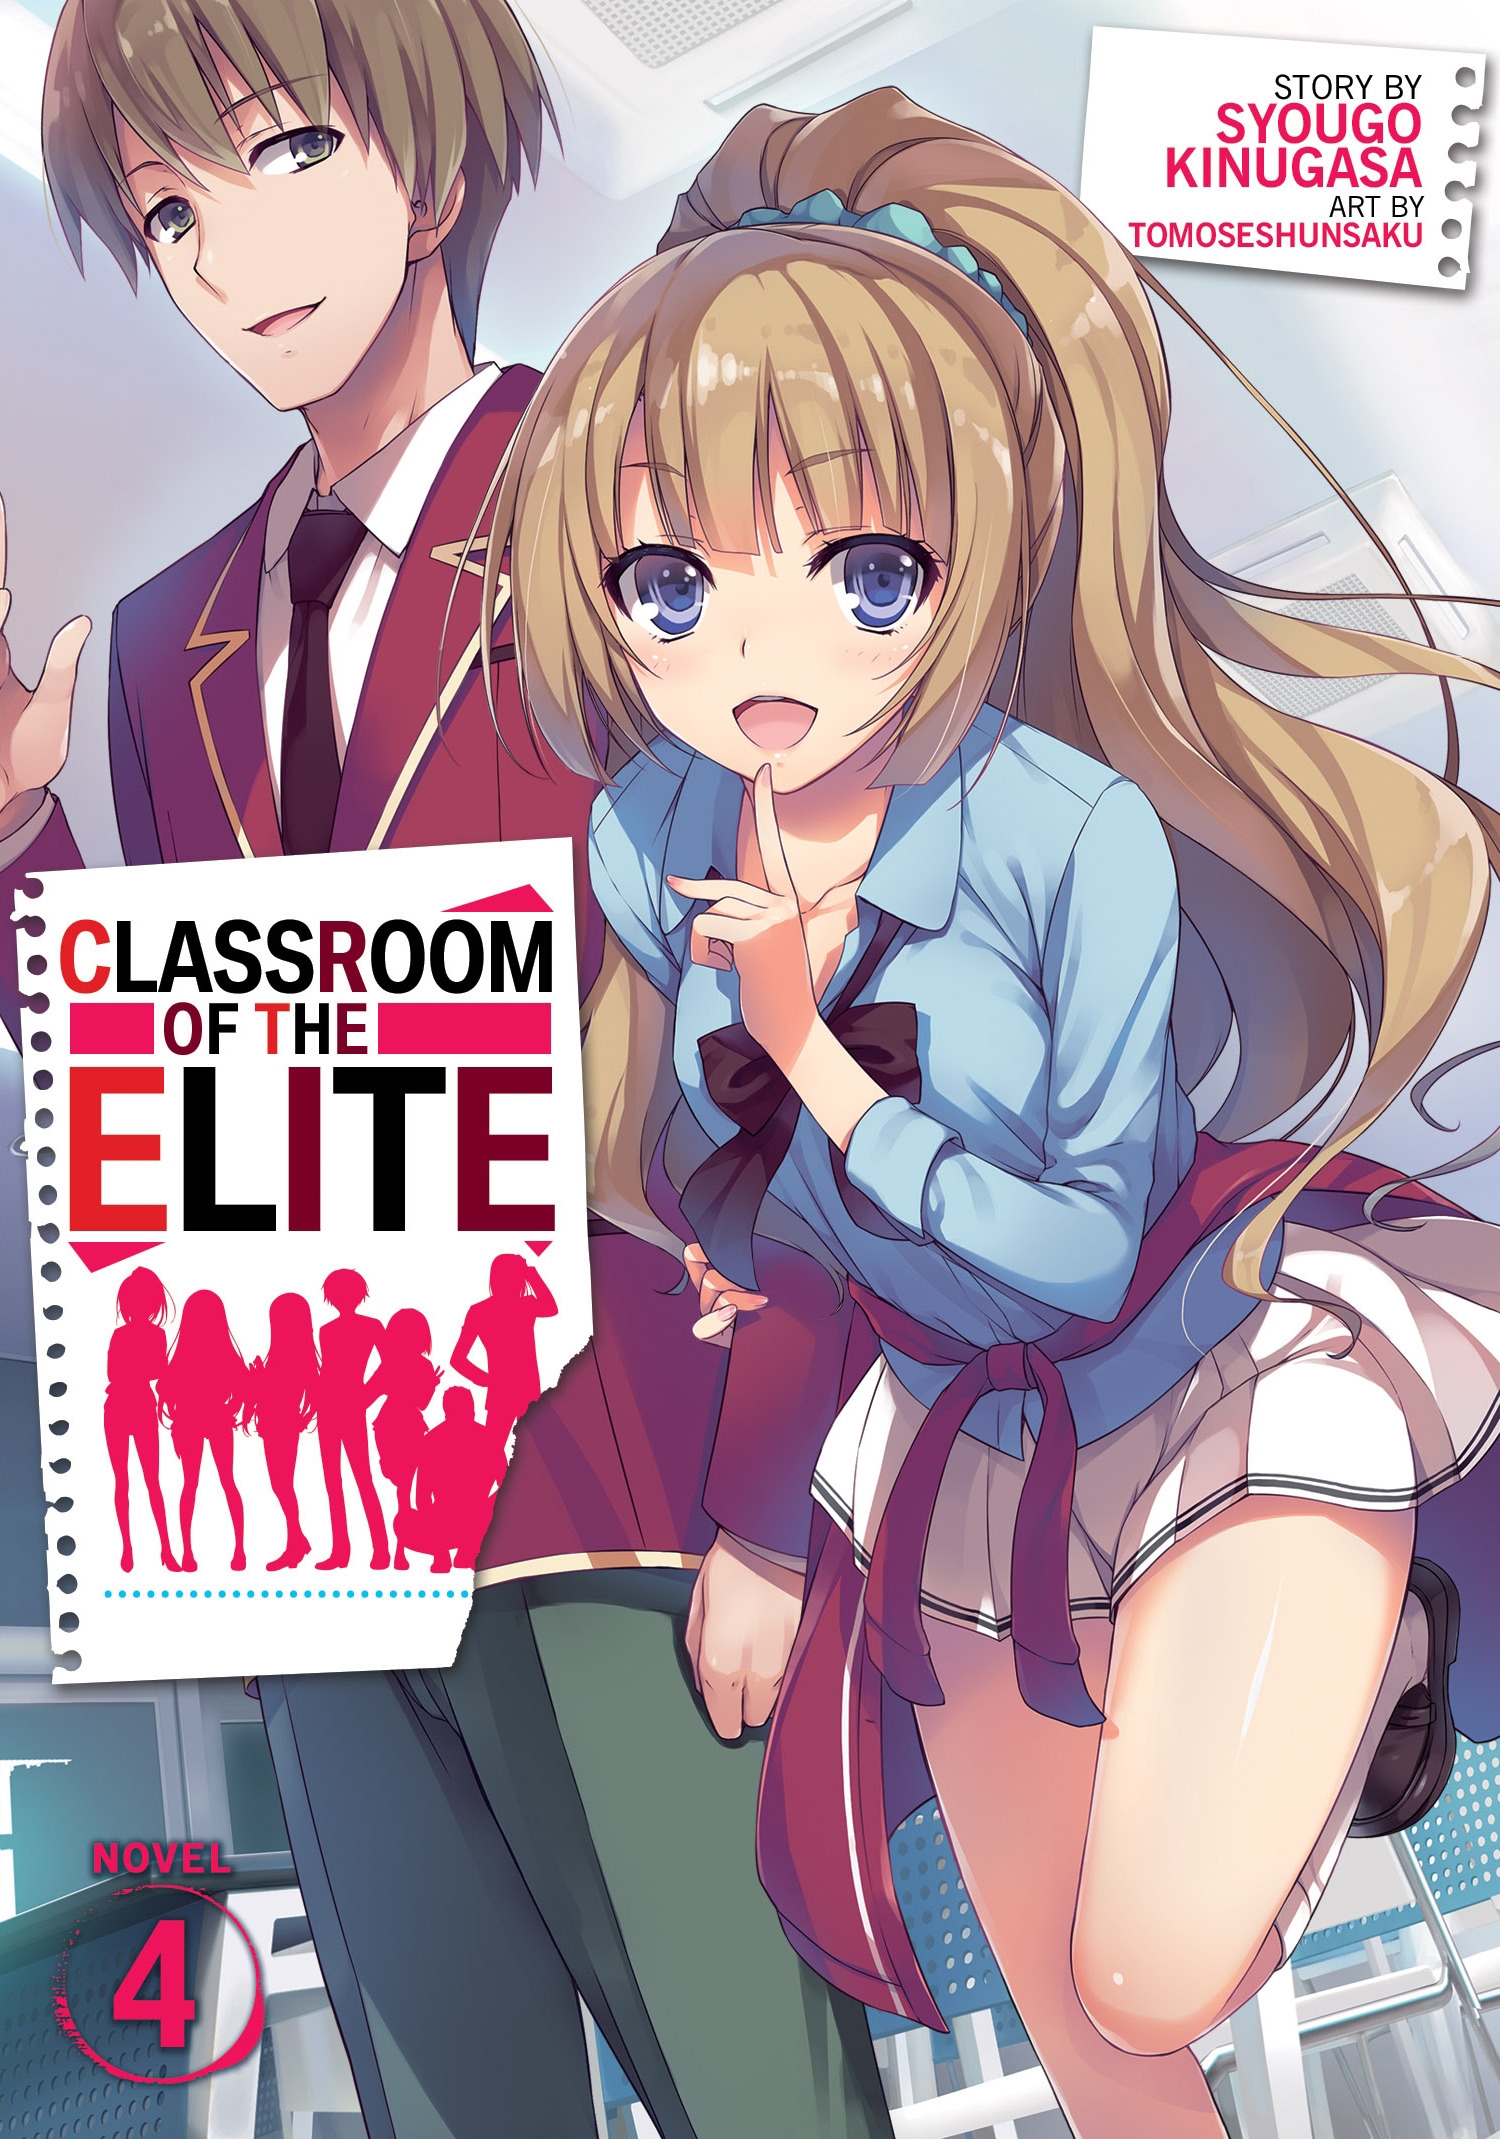 Classroom of the Elite (Literature) - TV Tropes